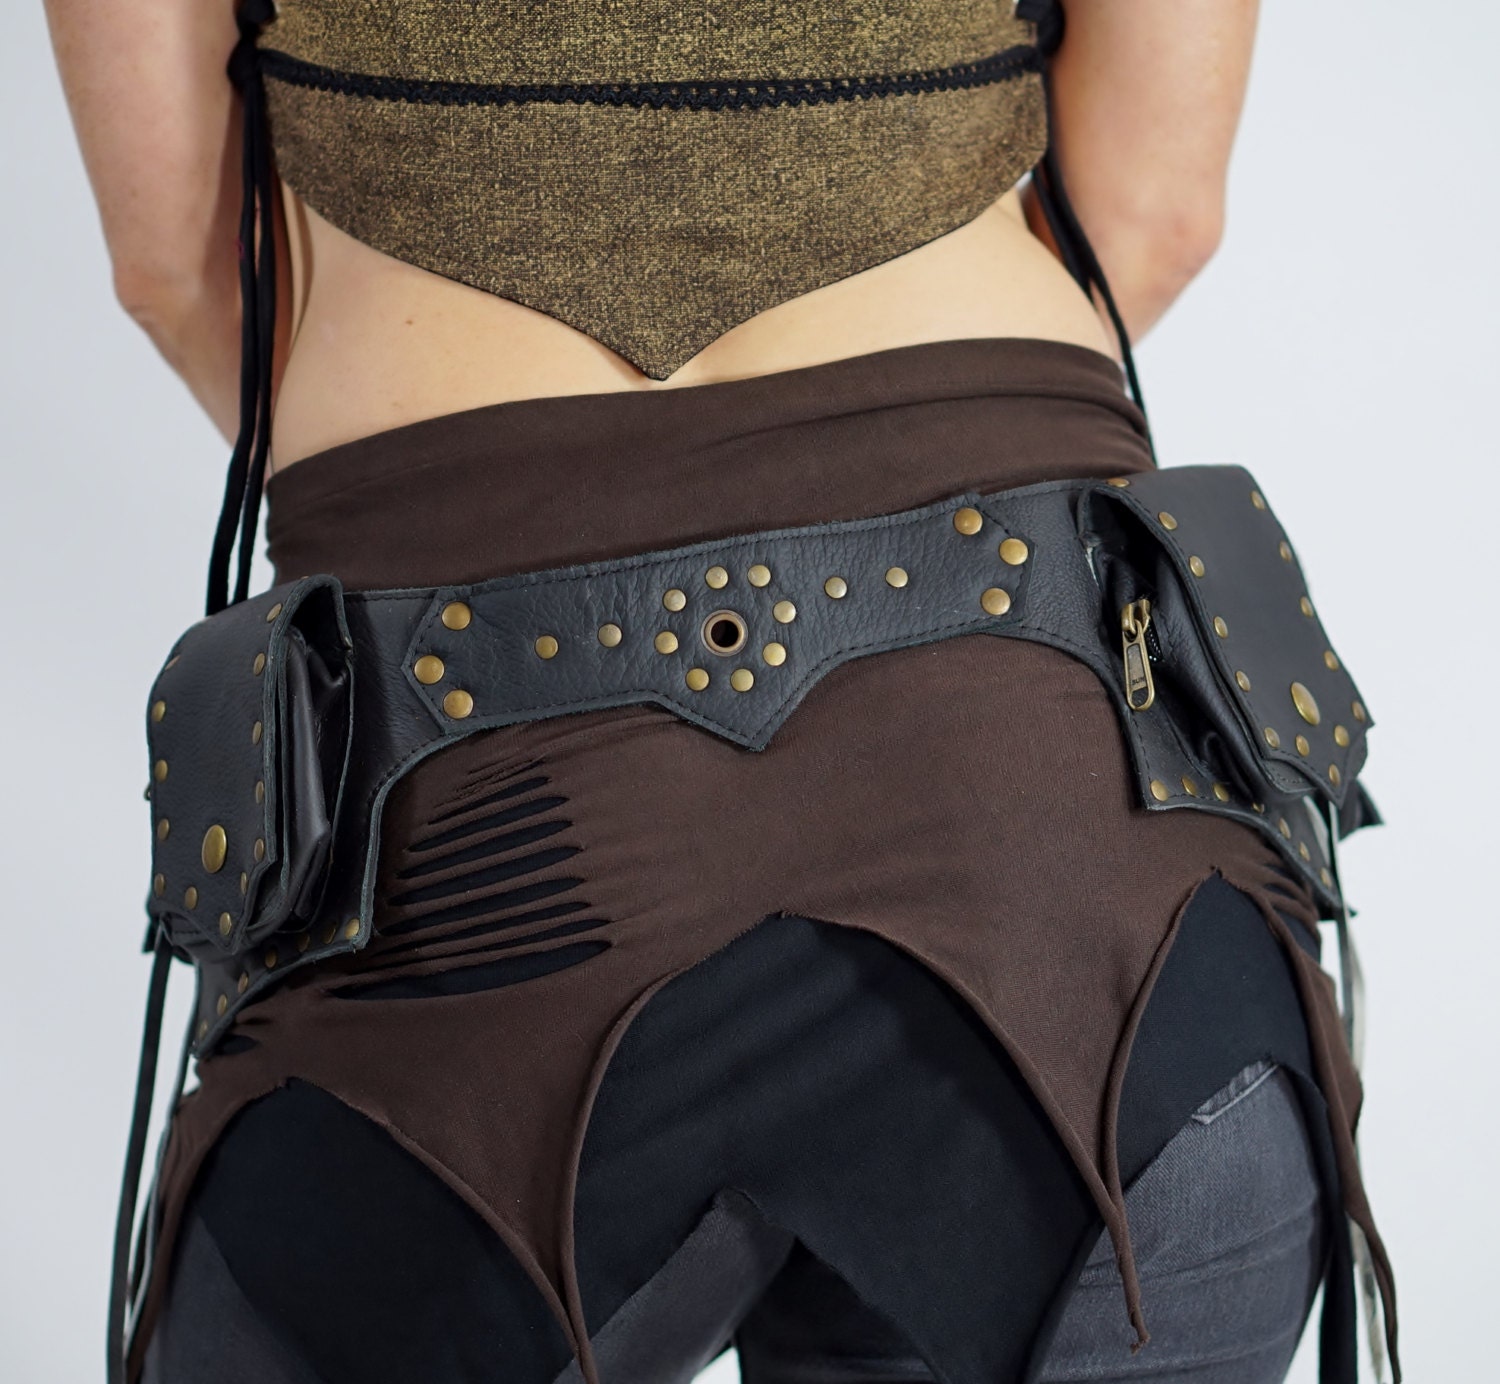 GOA Handmade Leather Utility Belt With Pockets Renaissance